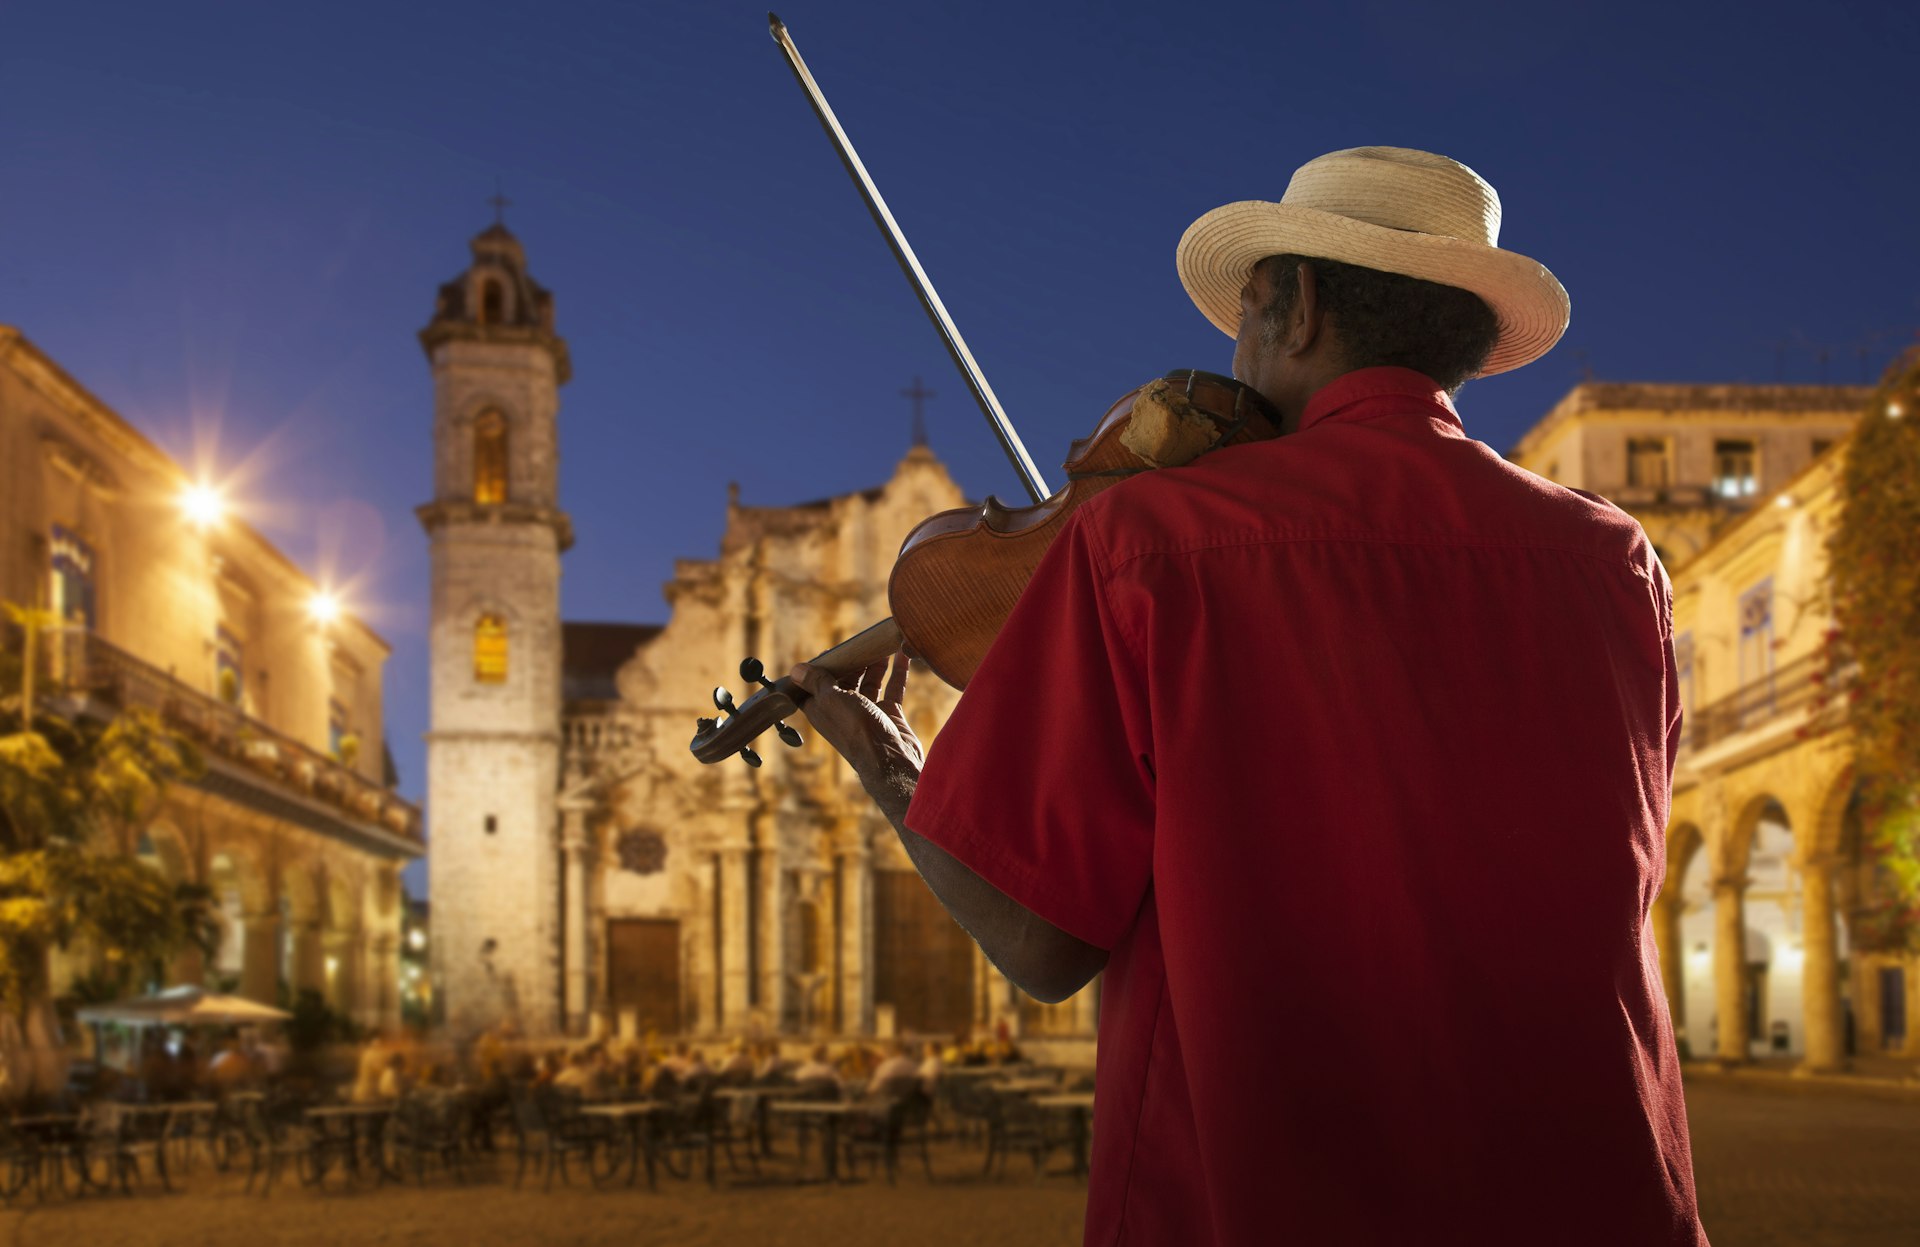 Man playing violin at night in Plaza de la Catedral in Havana, Cuba